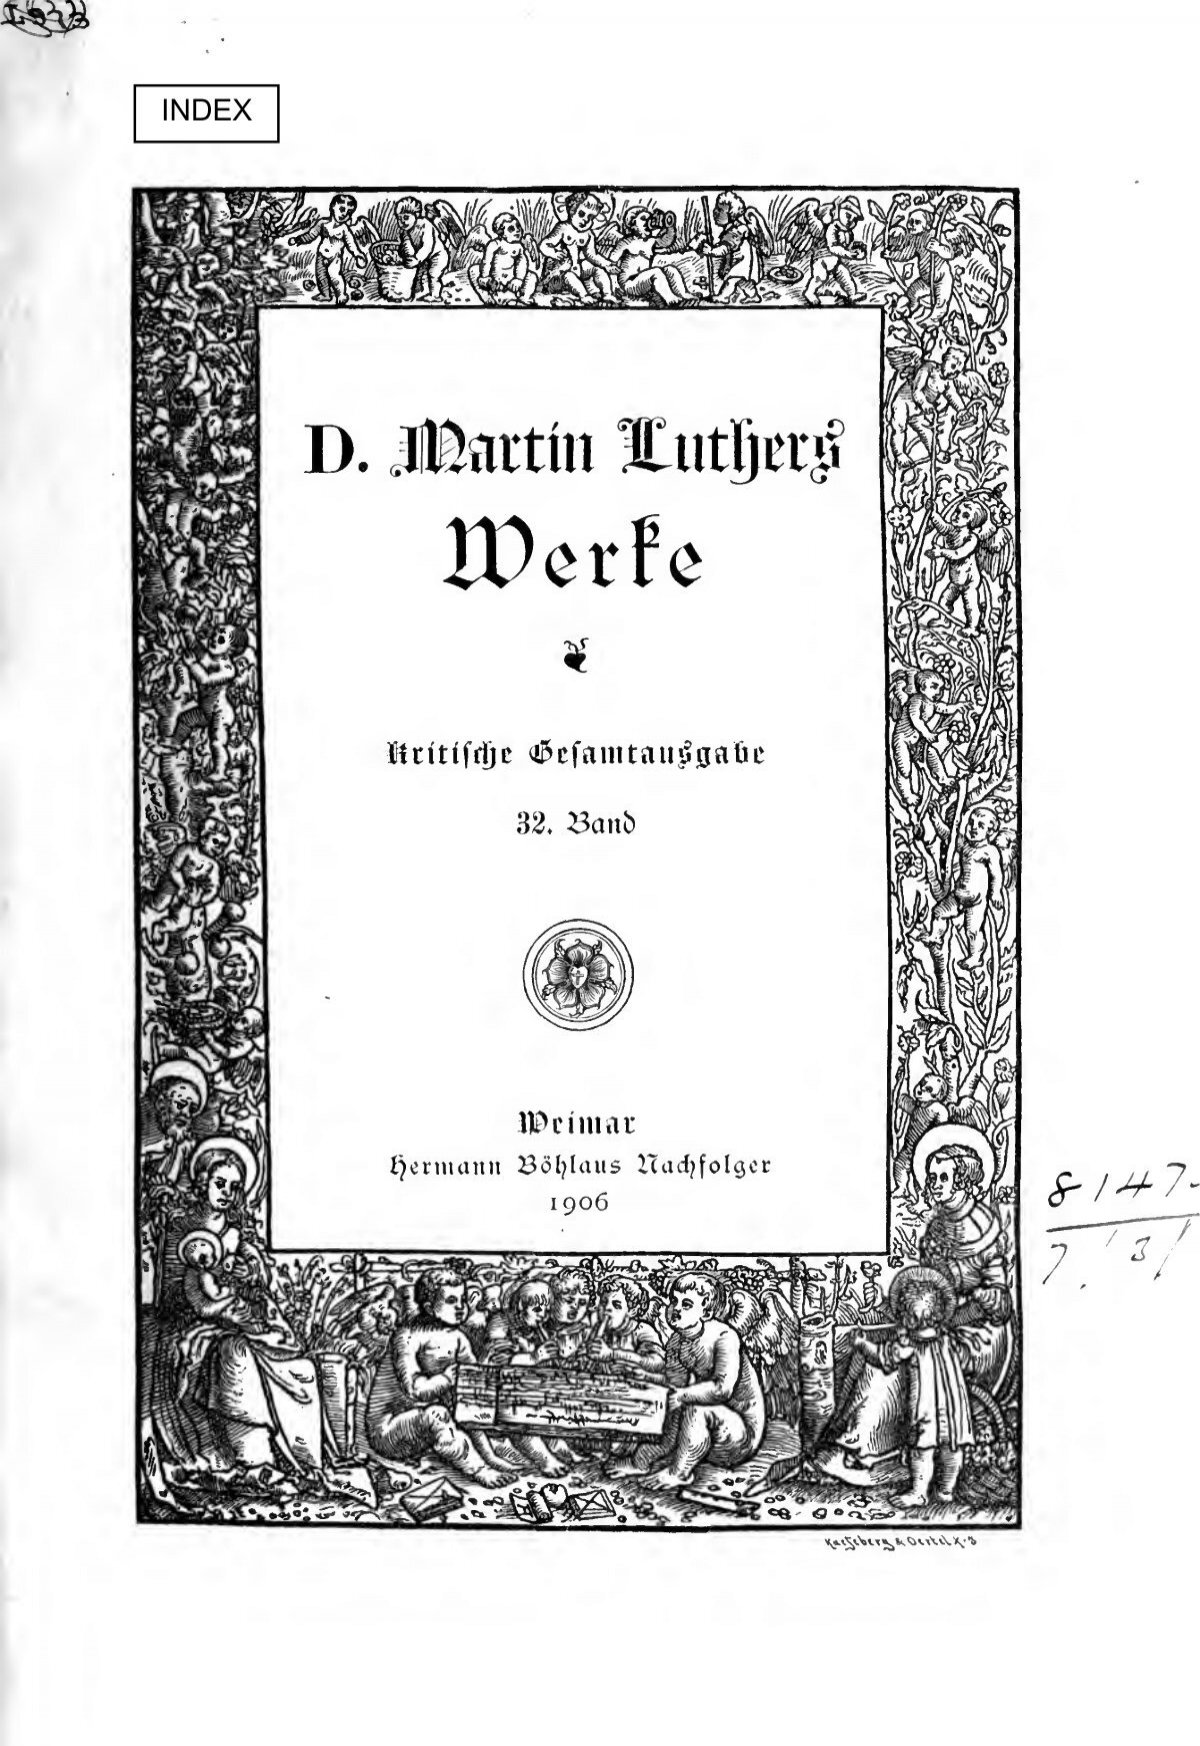 Predigten 1530 Reihenpredigten Uber Matthaus 5 7 Maarten Luther